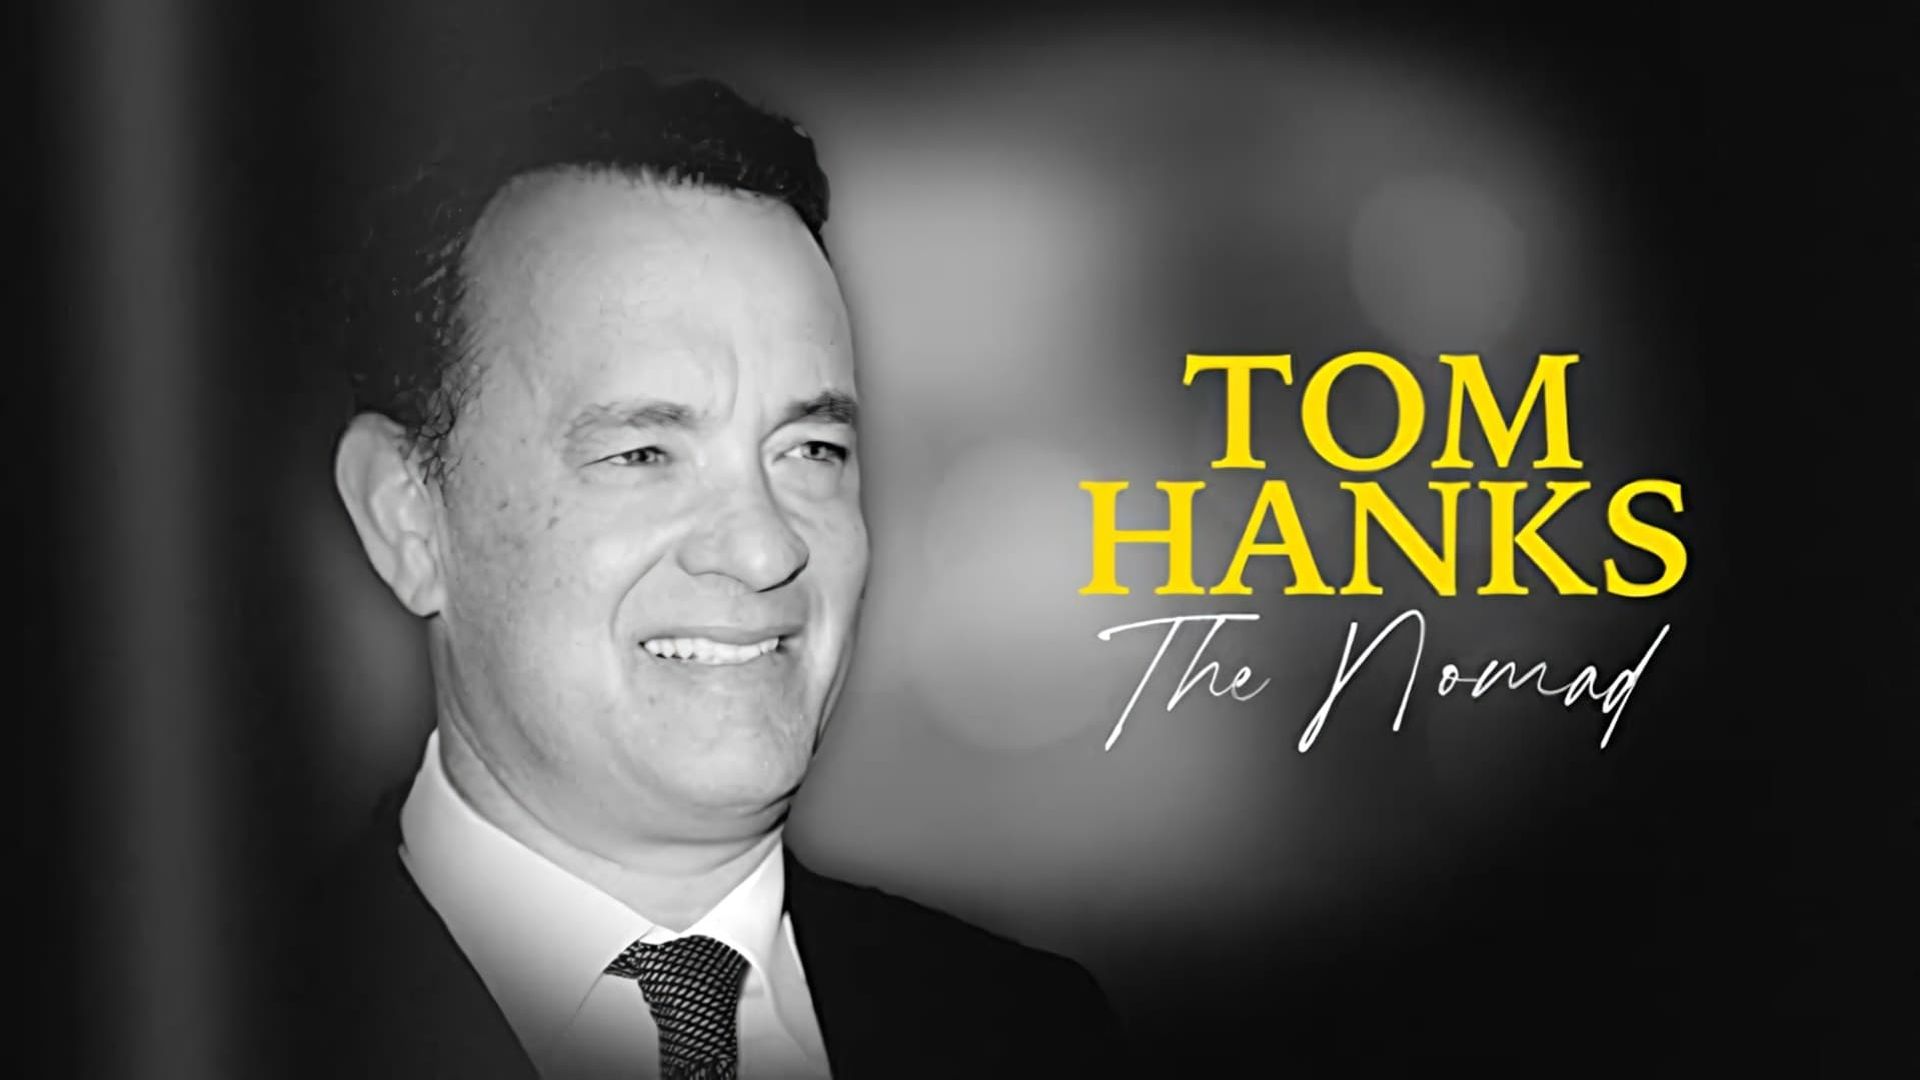 Tom Hanks: The Nomad background